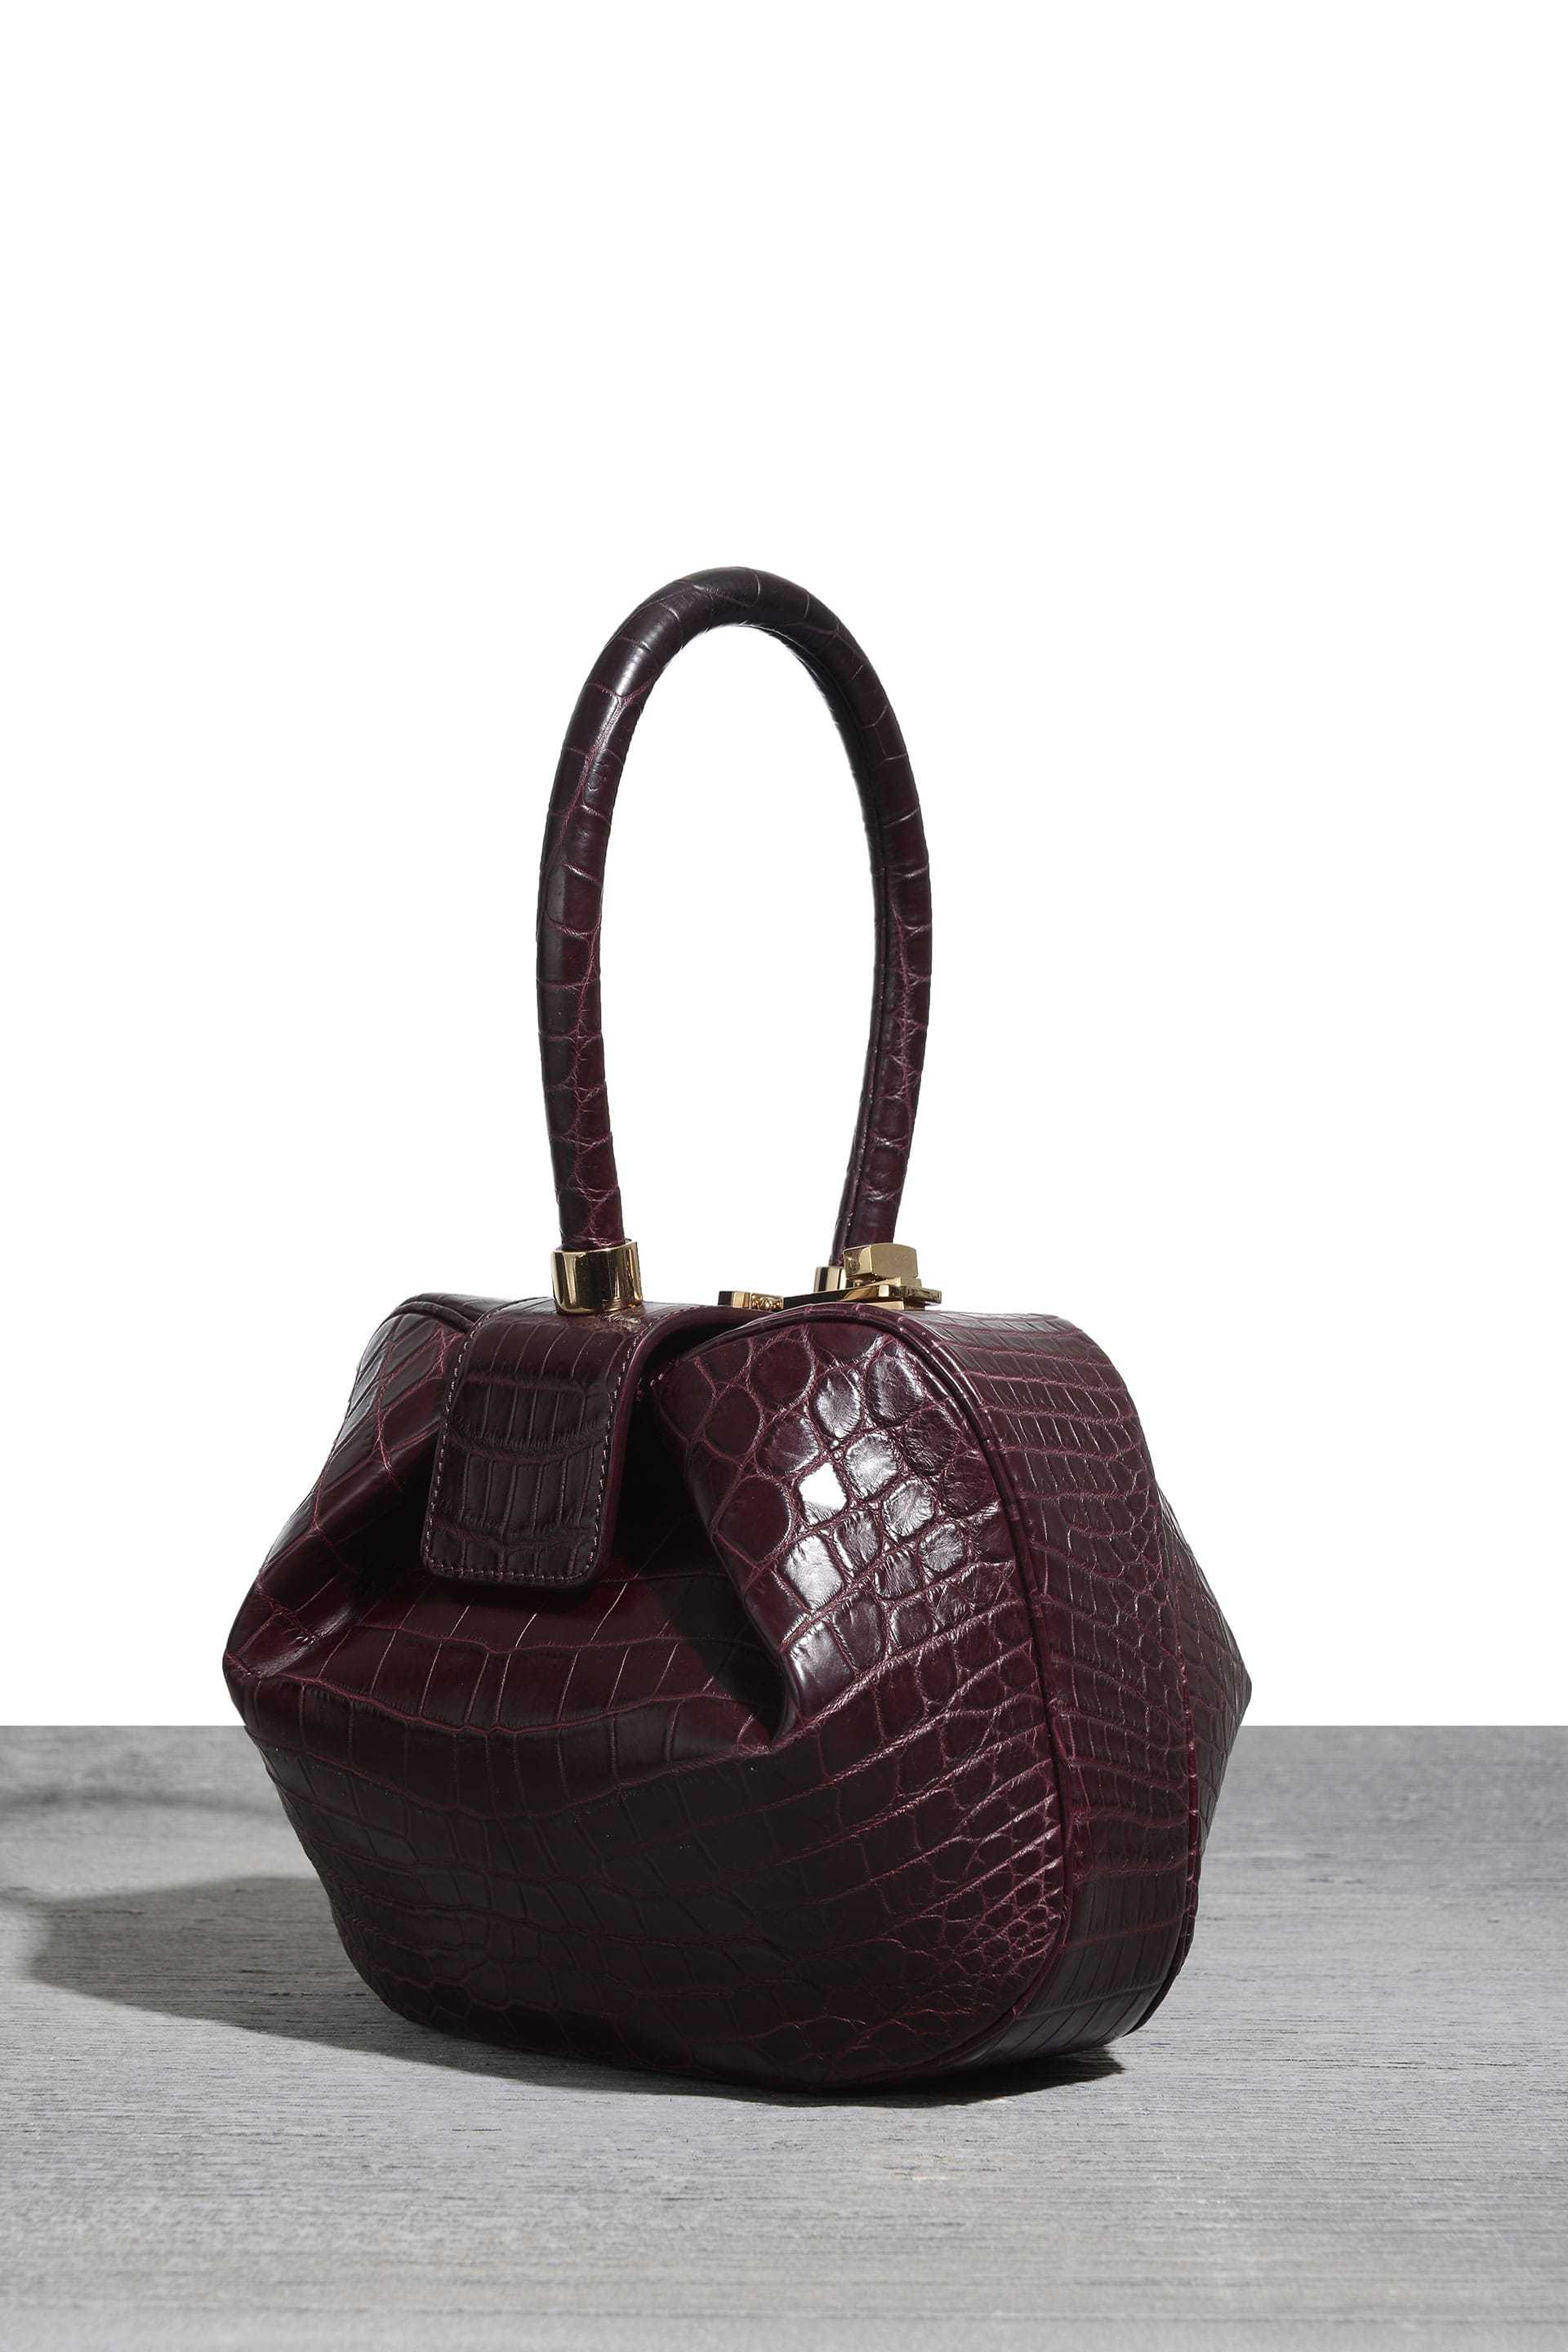  Nina bag in burgundy croc, $16,000, at Bergdorf Goodman and Net-a-Porter 